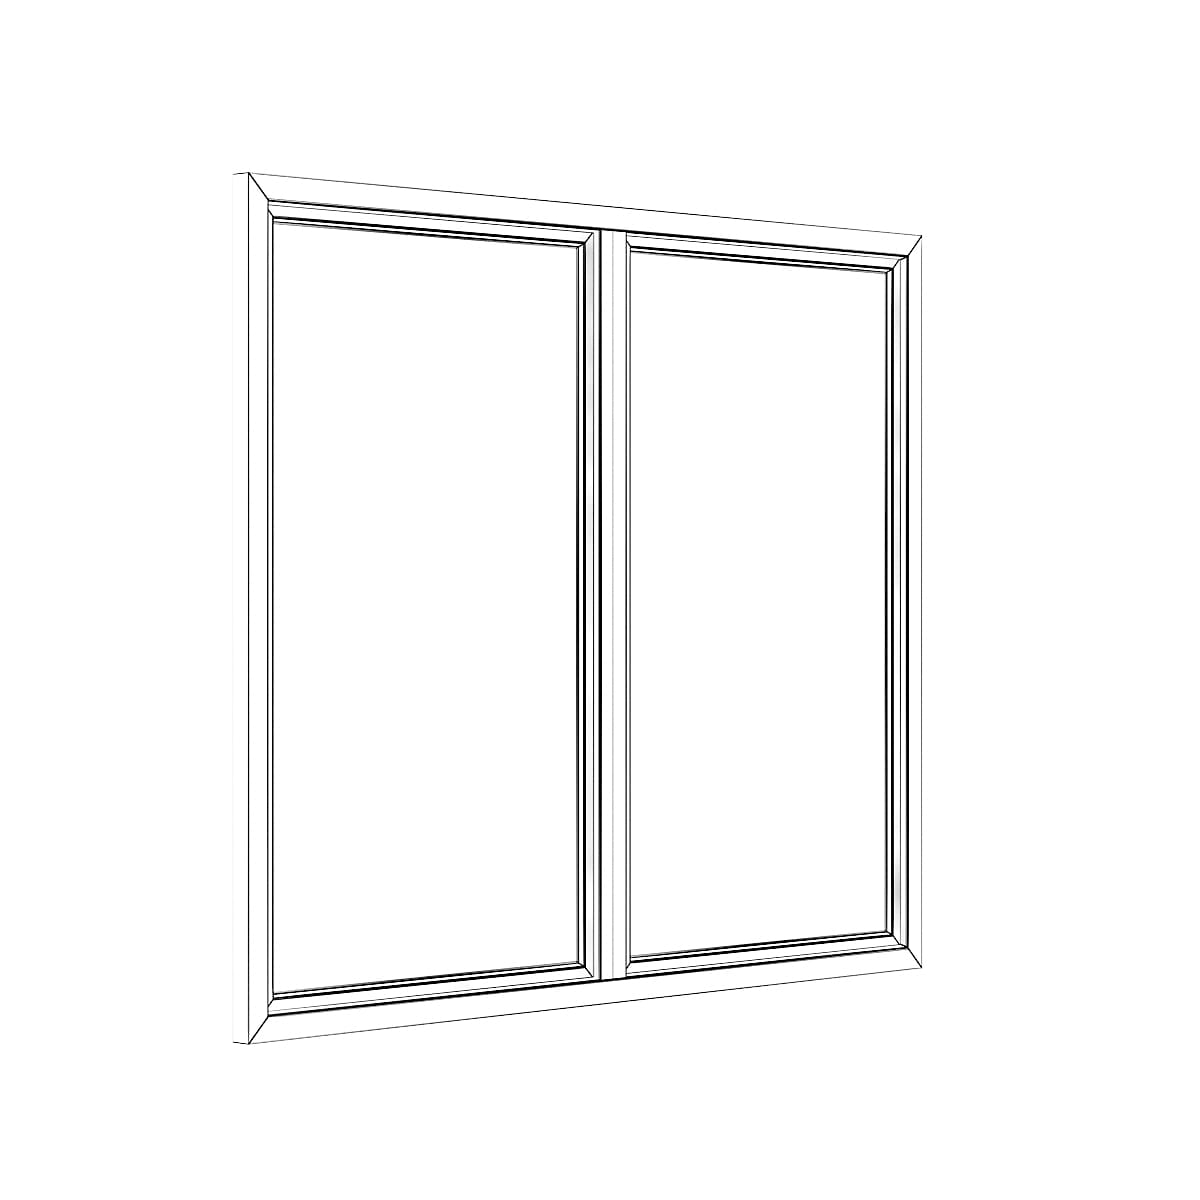 learn 3track sliding window material cutting measurement/स्लिडिंग खिरकी के  माल काटने का तरीका alumi. - YouTube